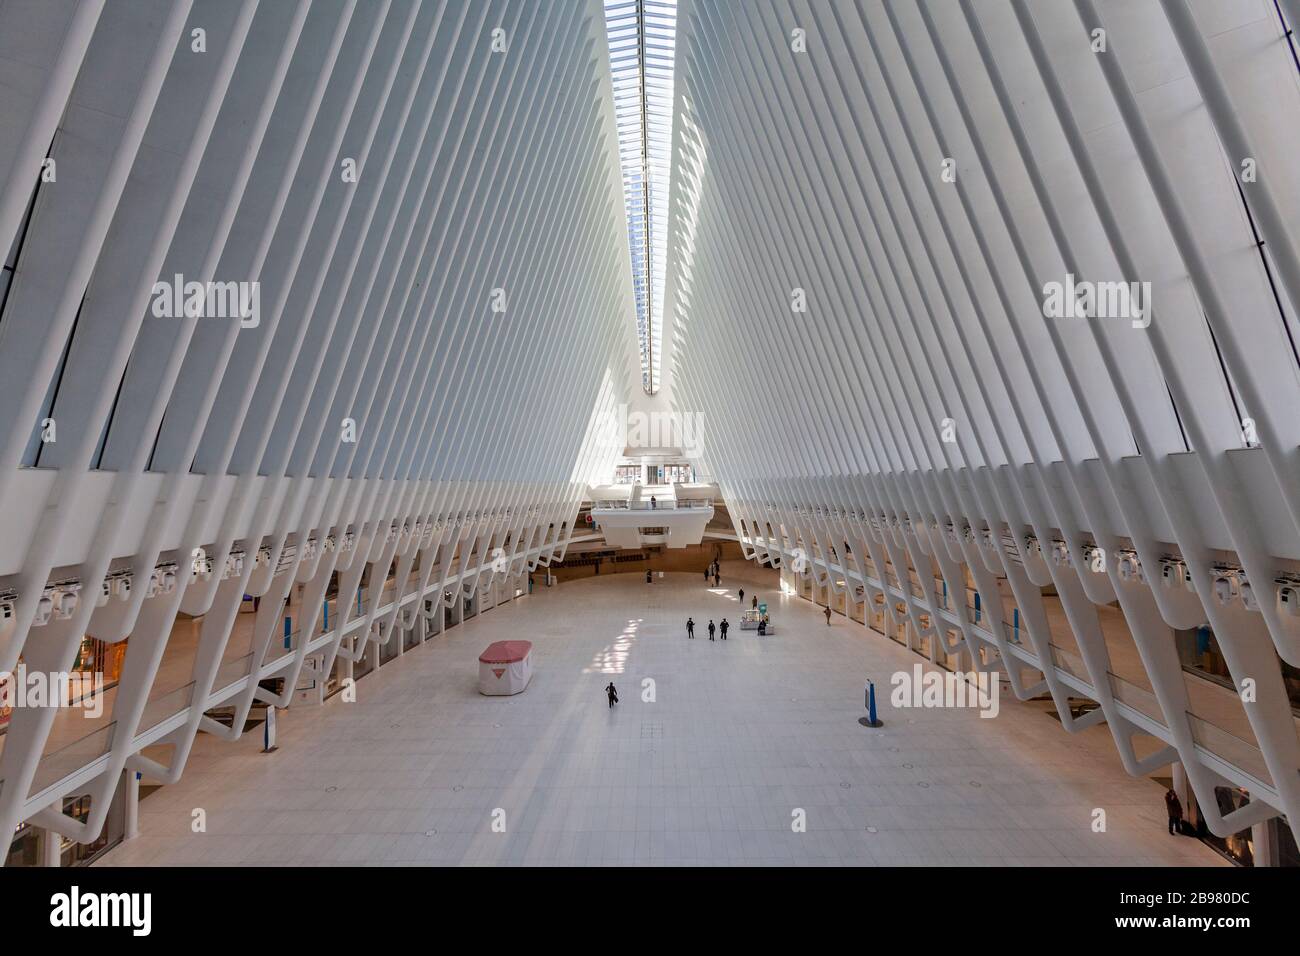 Very few passengers in the World Trade Center Oculus in New York City because of COVID-19, Coronavirus. Stock Photo